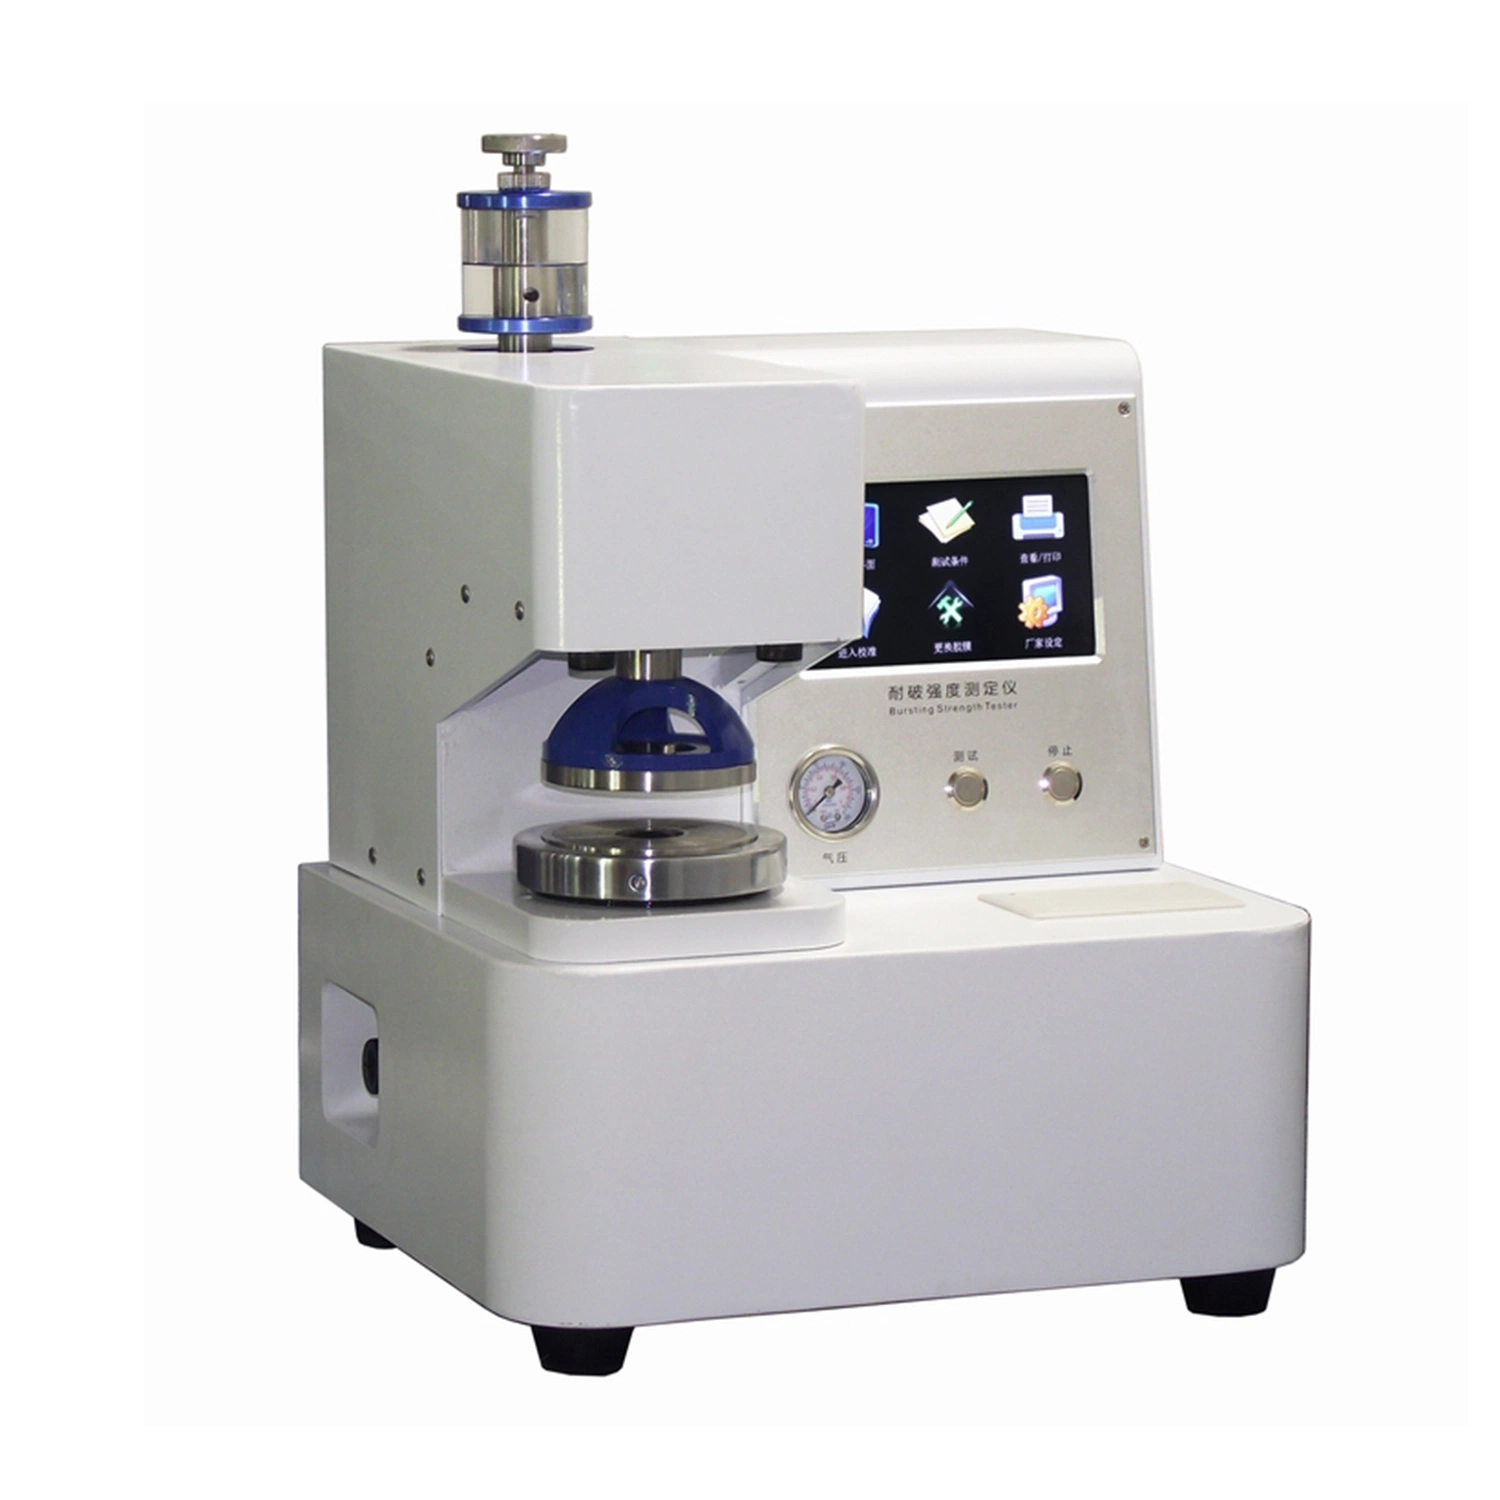 Paper Bursting Automatic Pressure Burst Strength Lab Testing Instrument